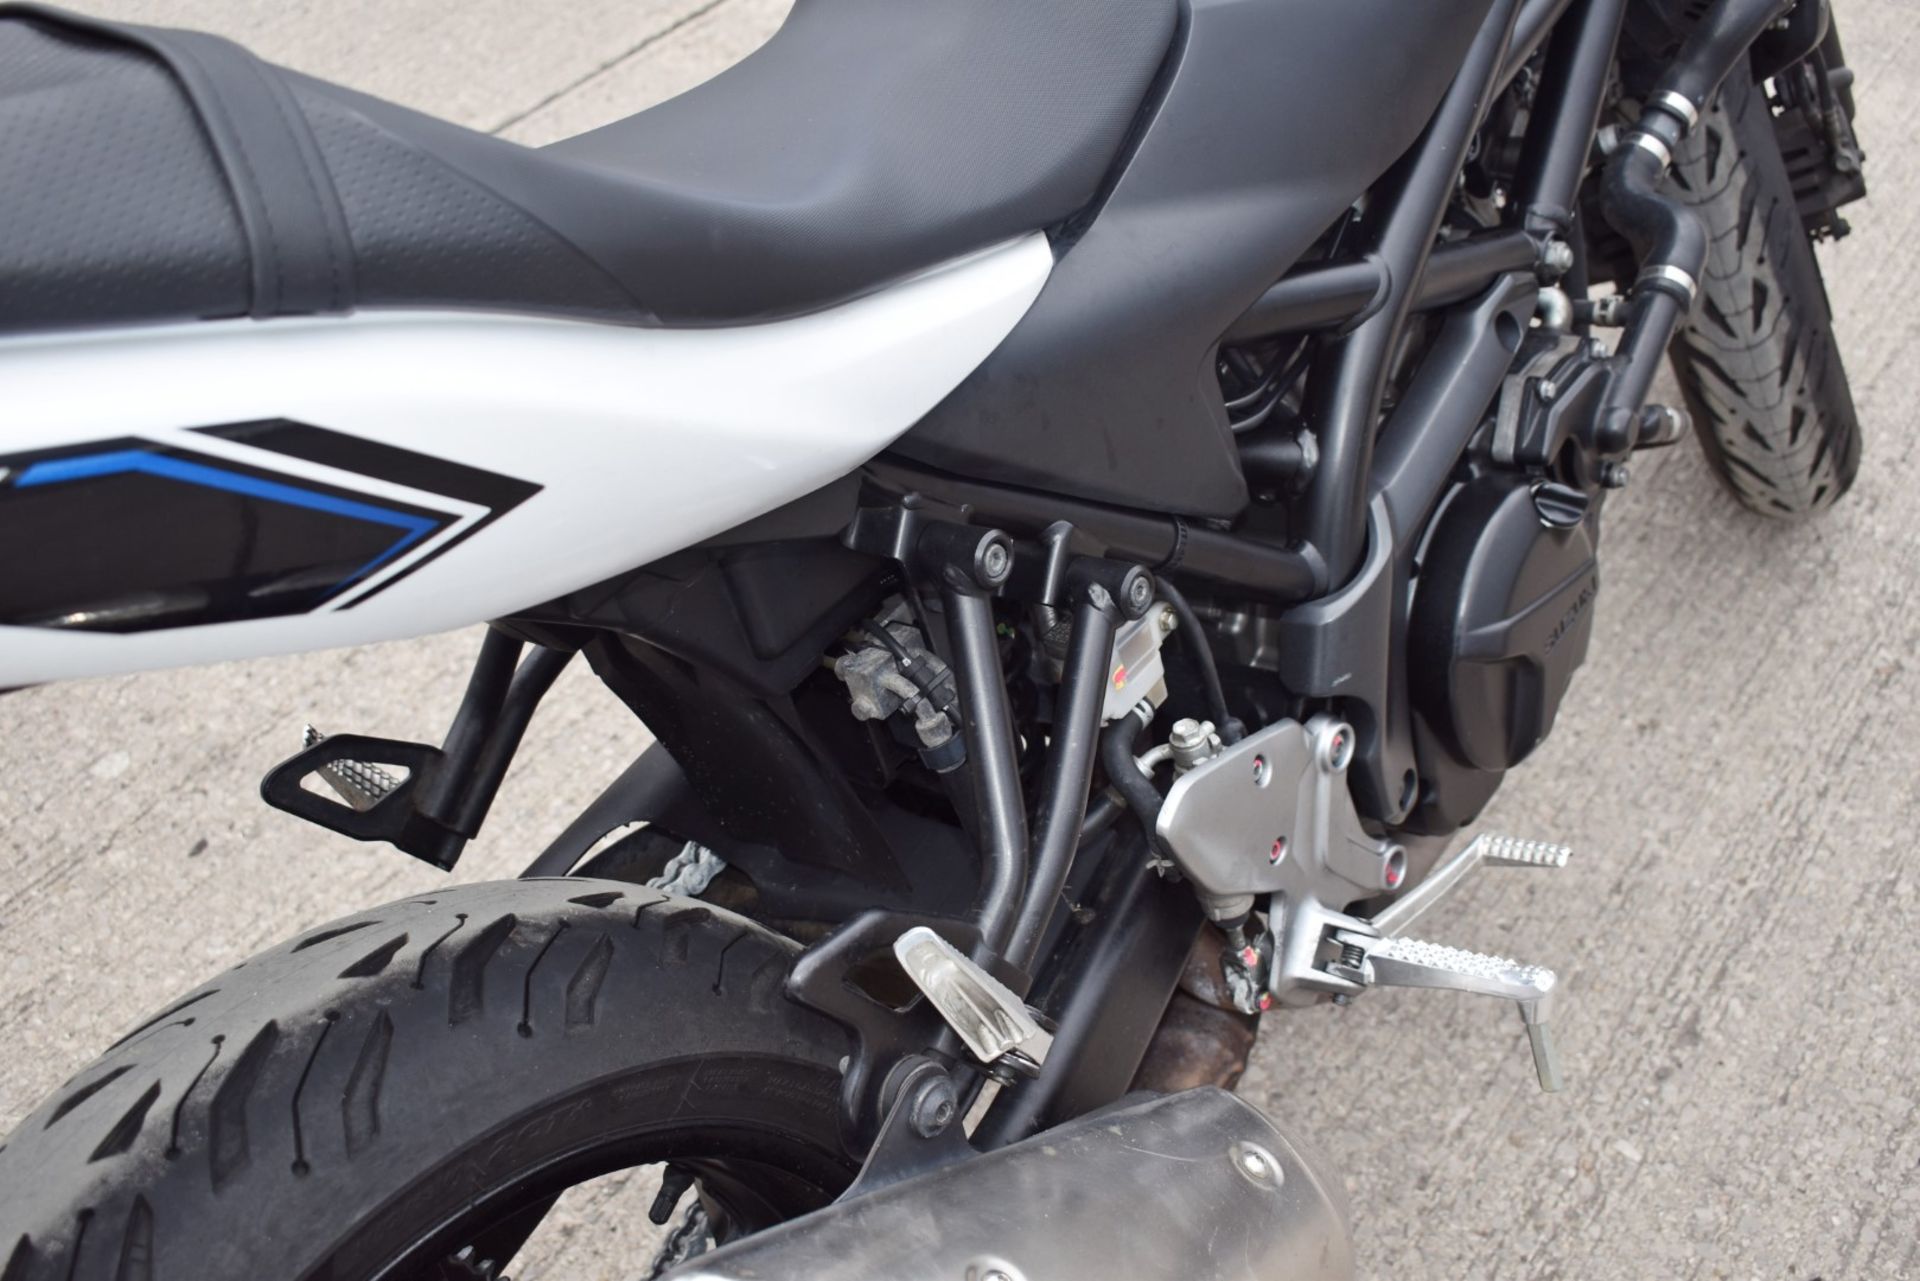 2018 Suzuki SV650 Motorcycle - BA18 UFV - Mileage: 18,188 - Image 16 of 25